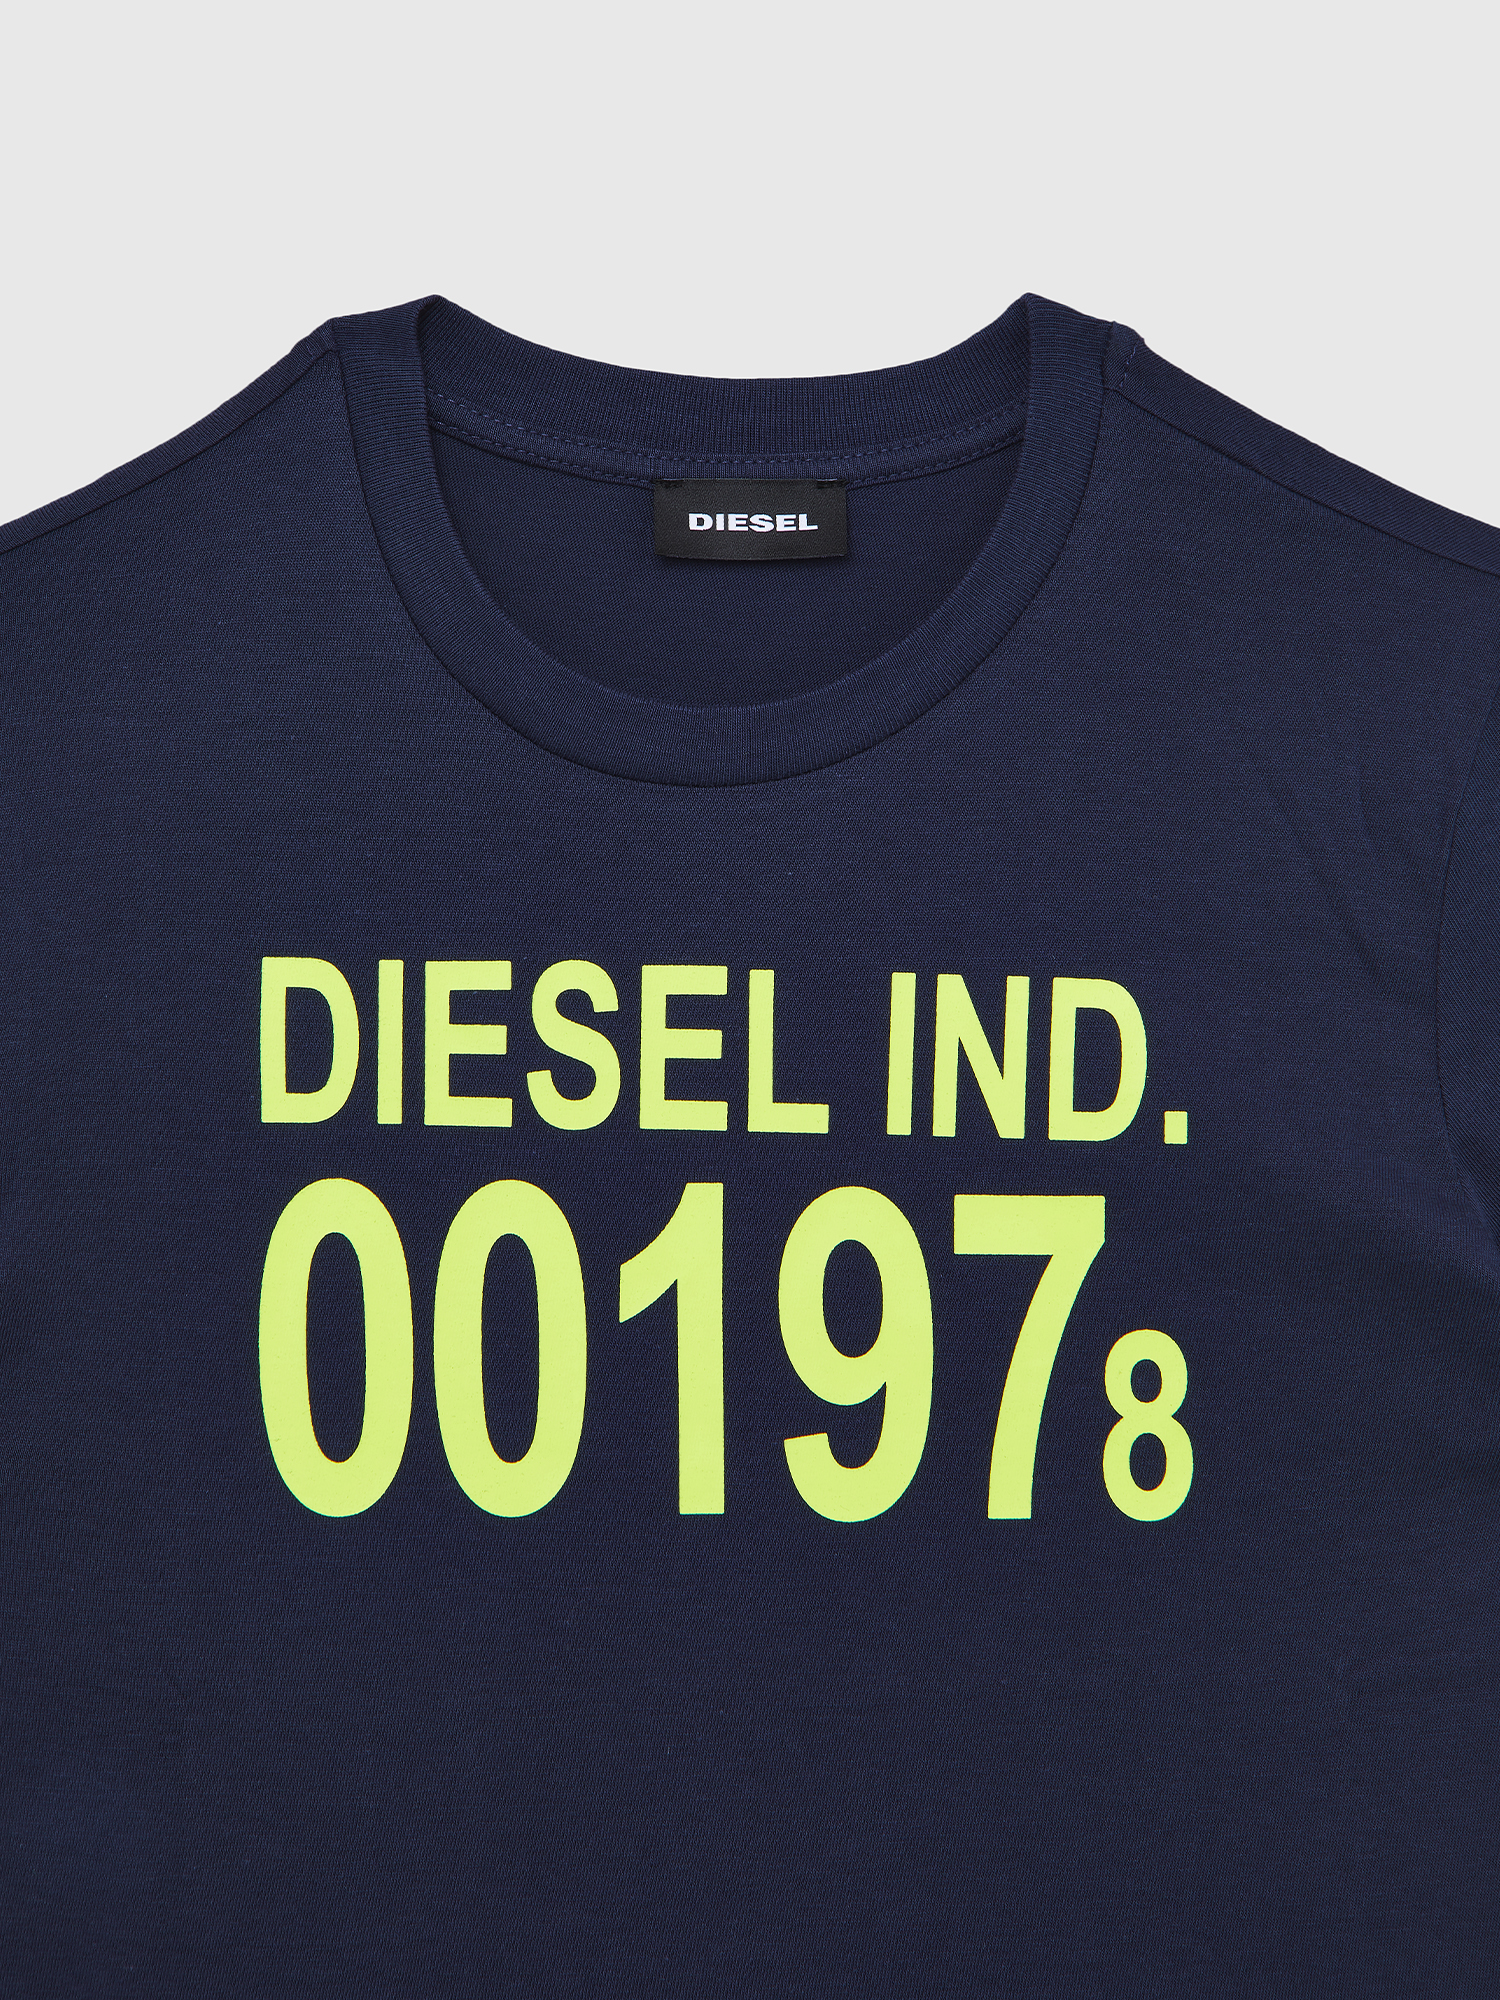 Diesel - TDIEGO001978, Dark Blue - Image 3